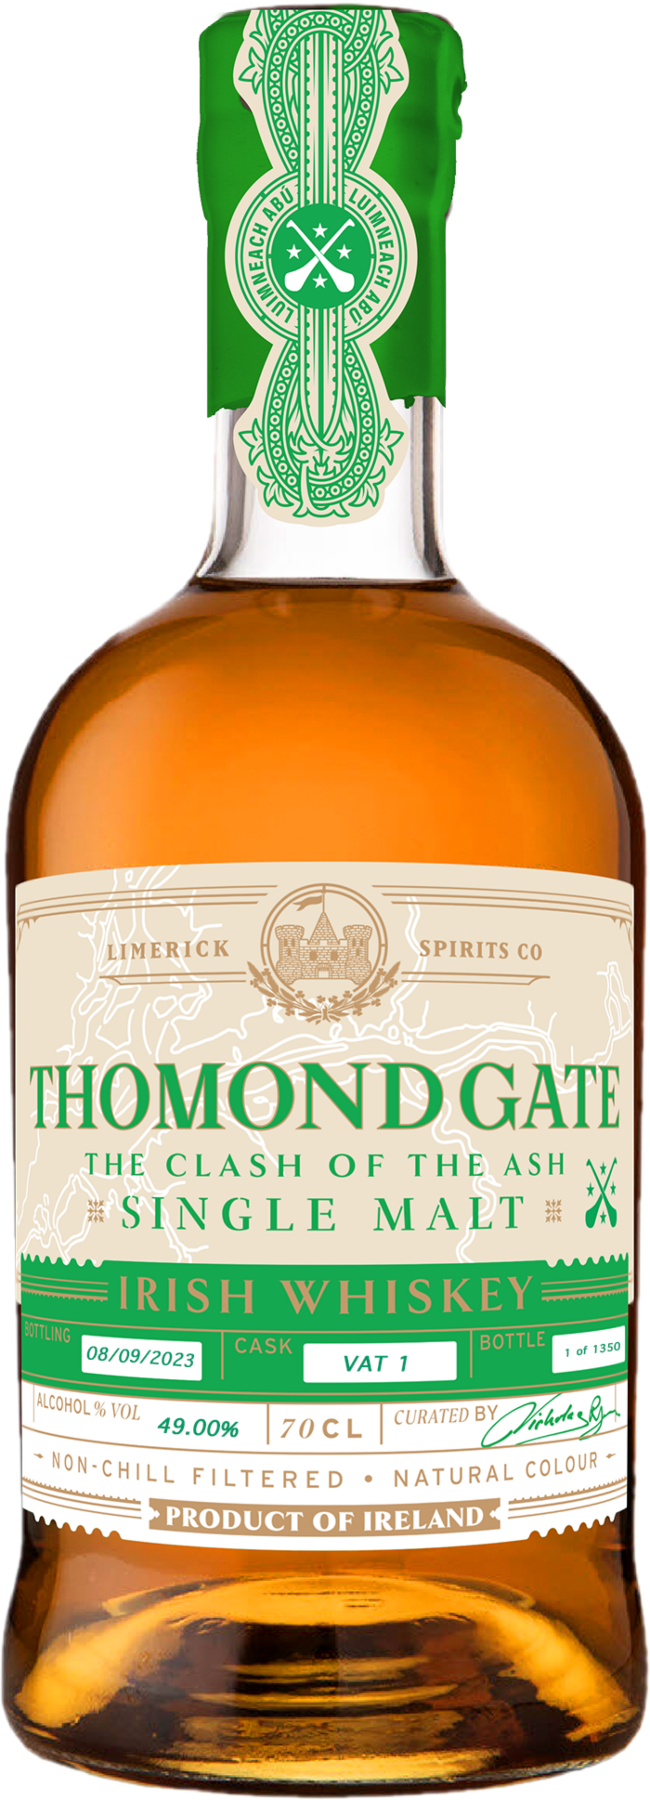 bottle of Thomond Gate Irish whiskey.